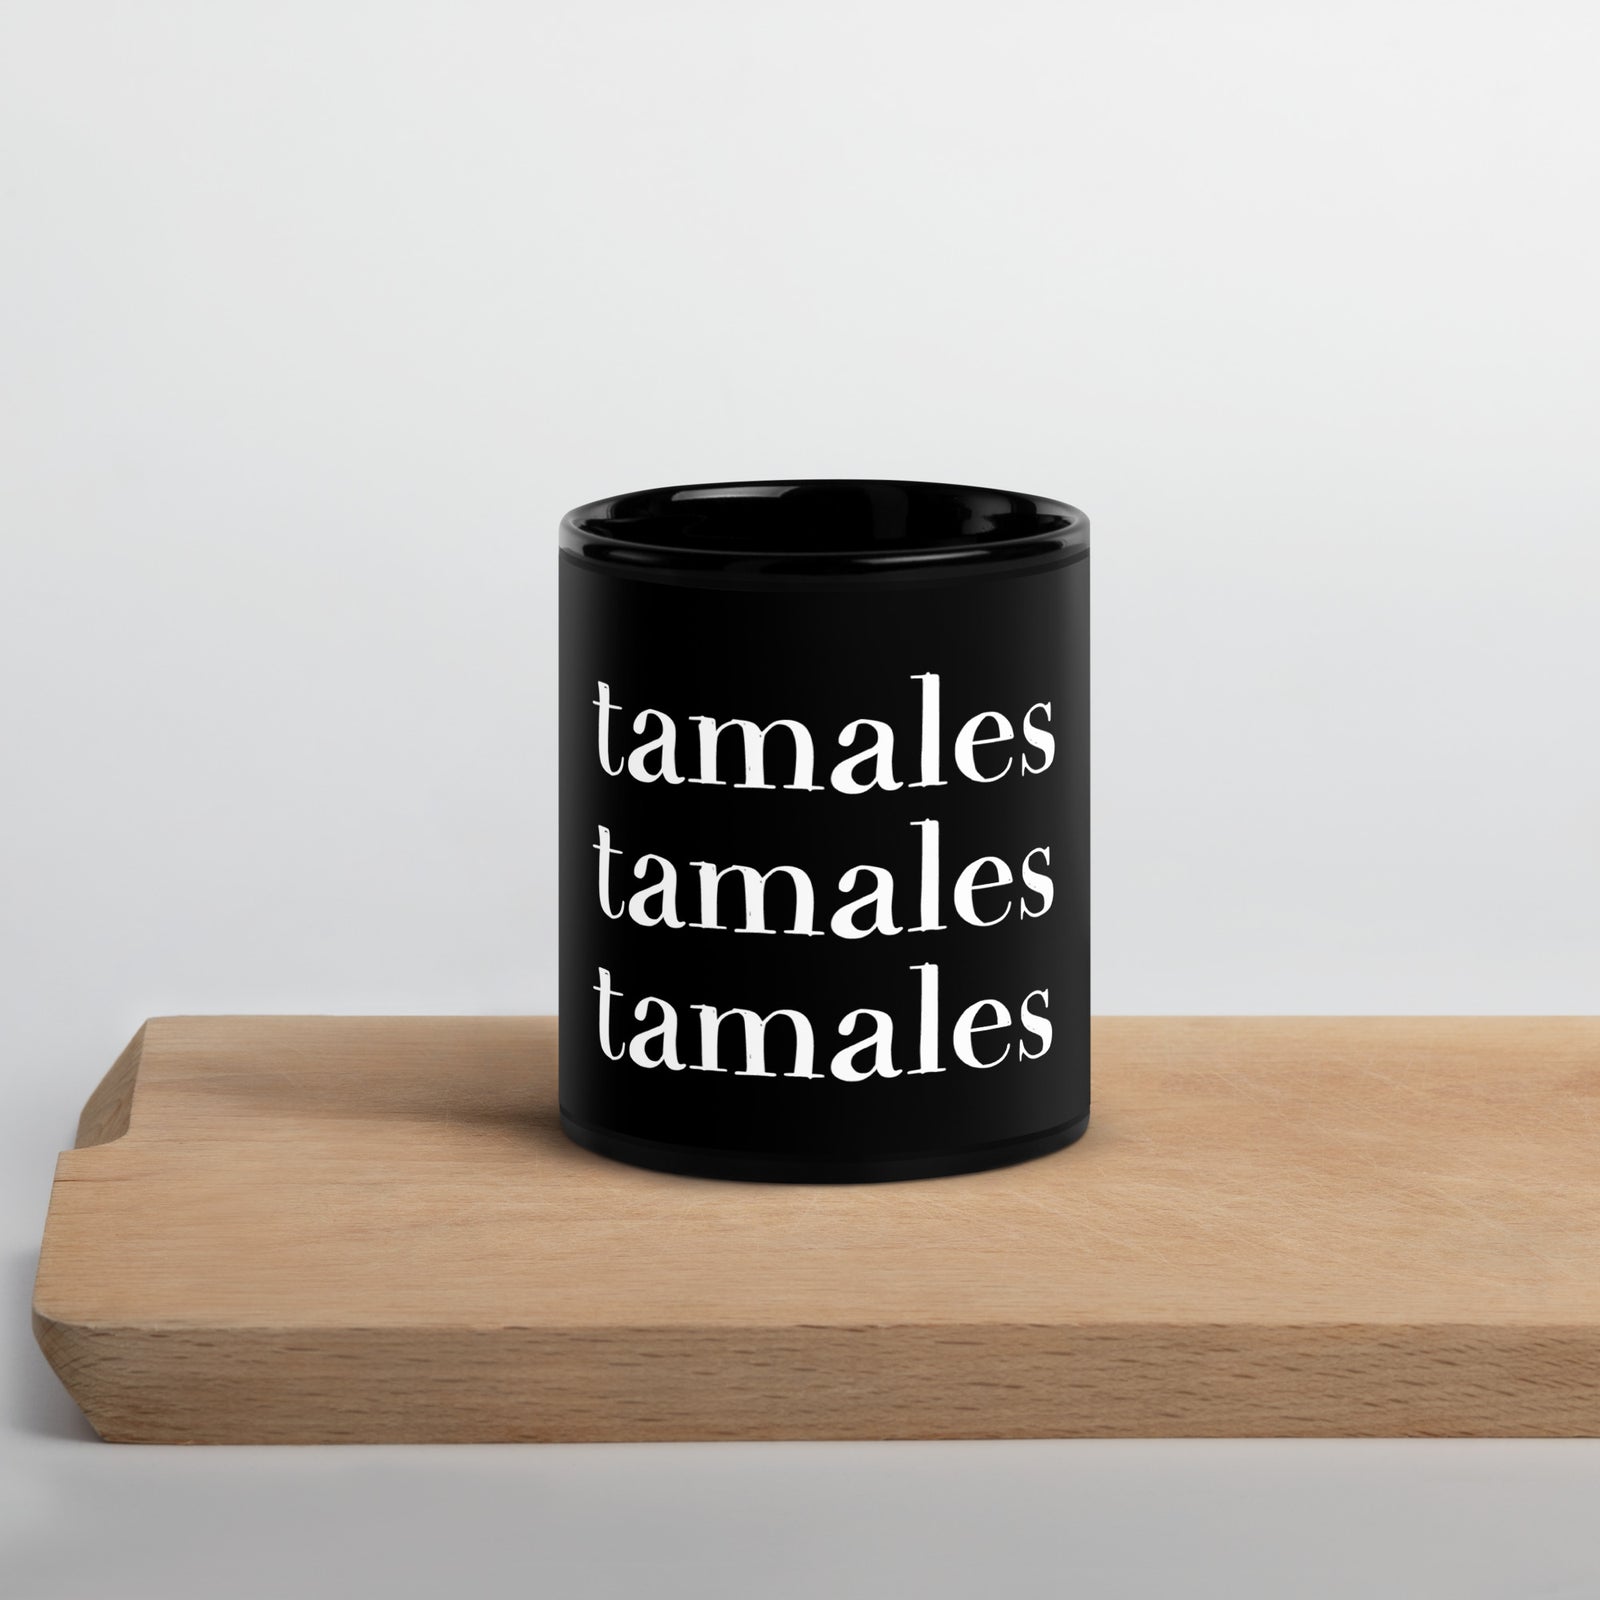 Tamales - Black Glossy Mug